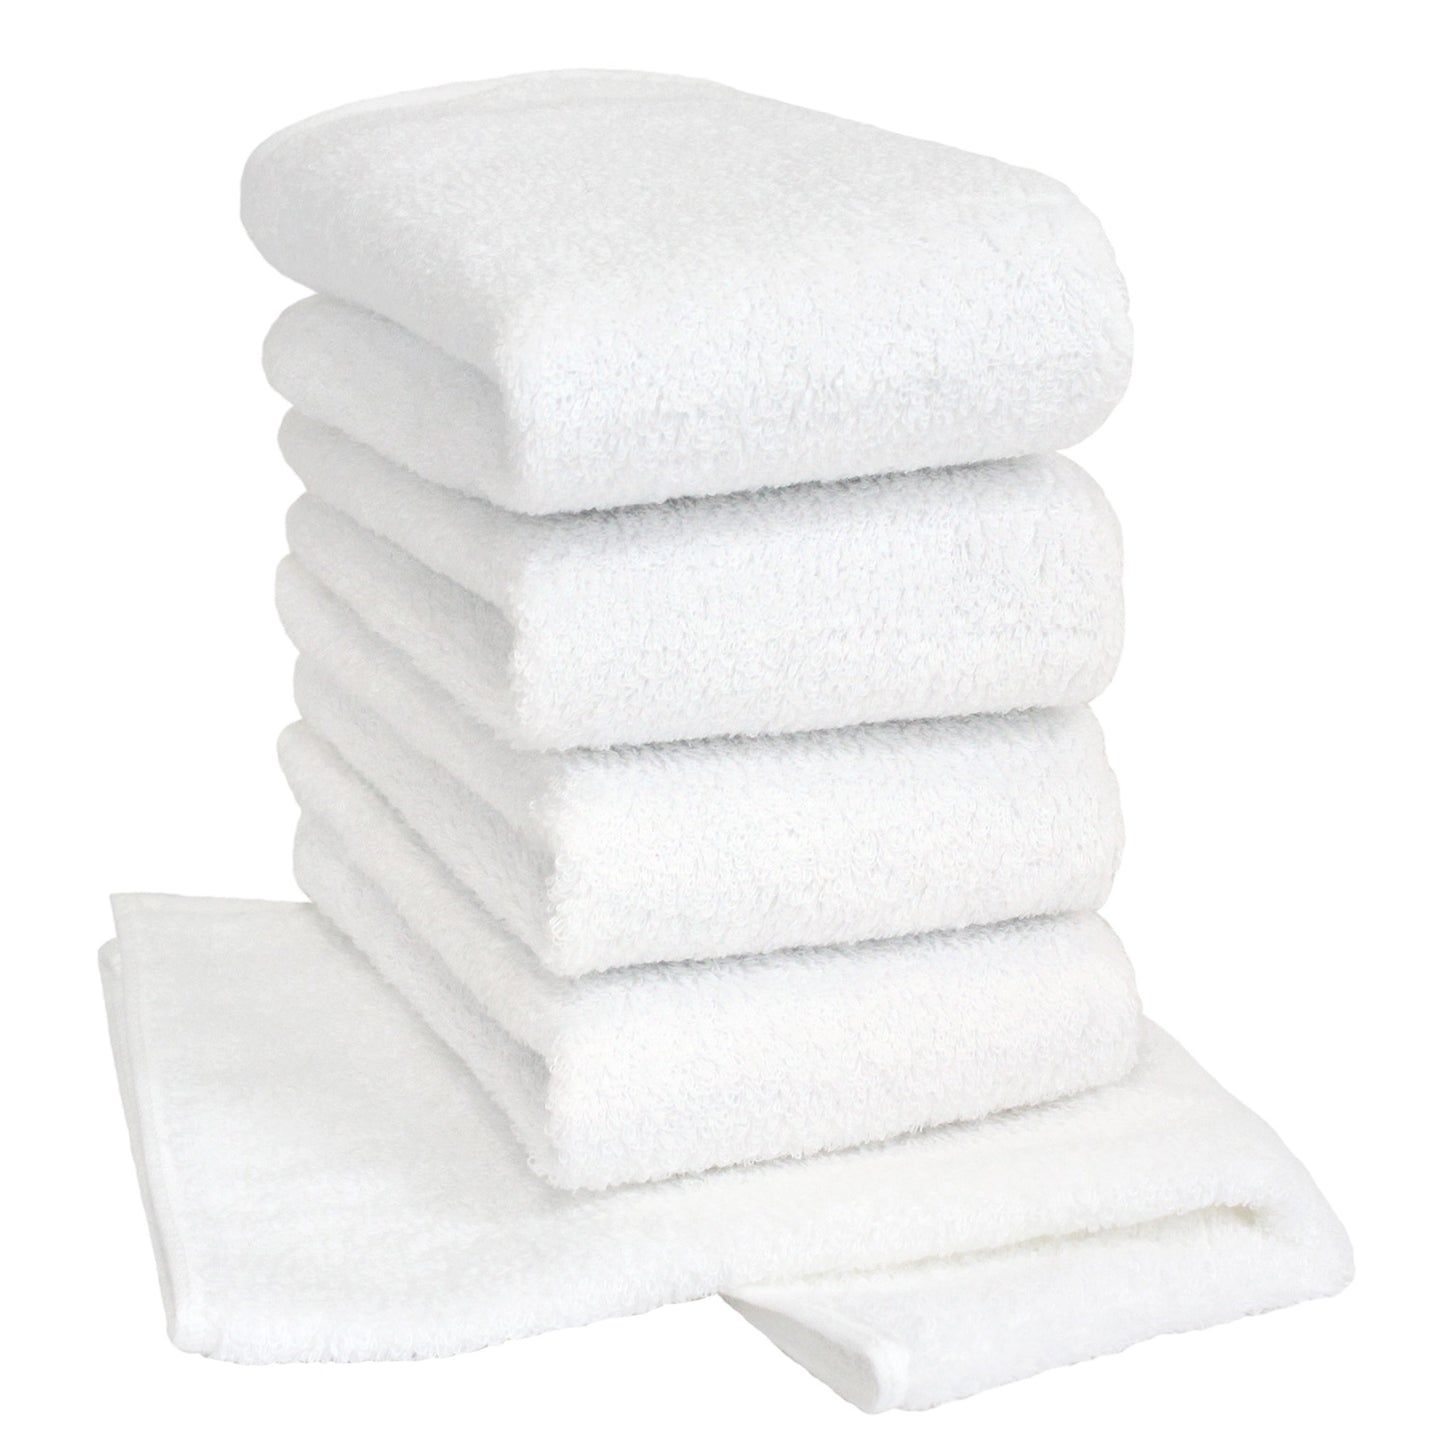 Senshu - Hand Towel Cotton Classy 5-Pack